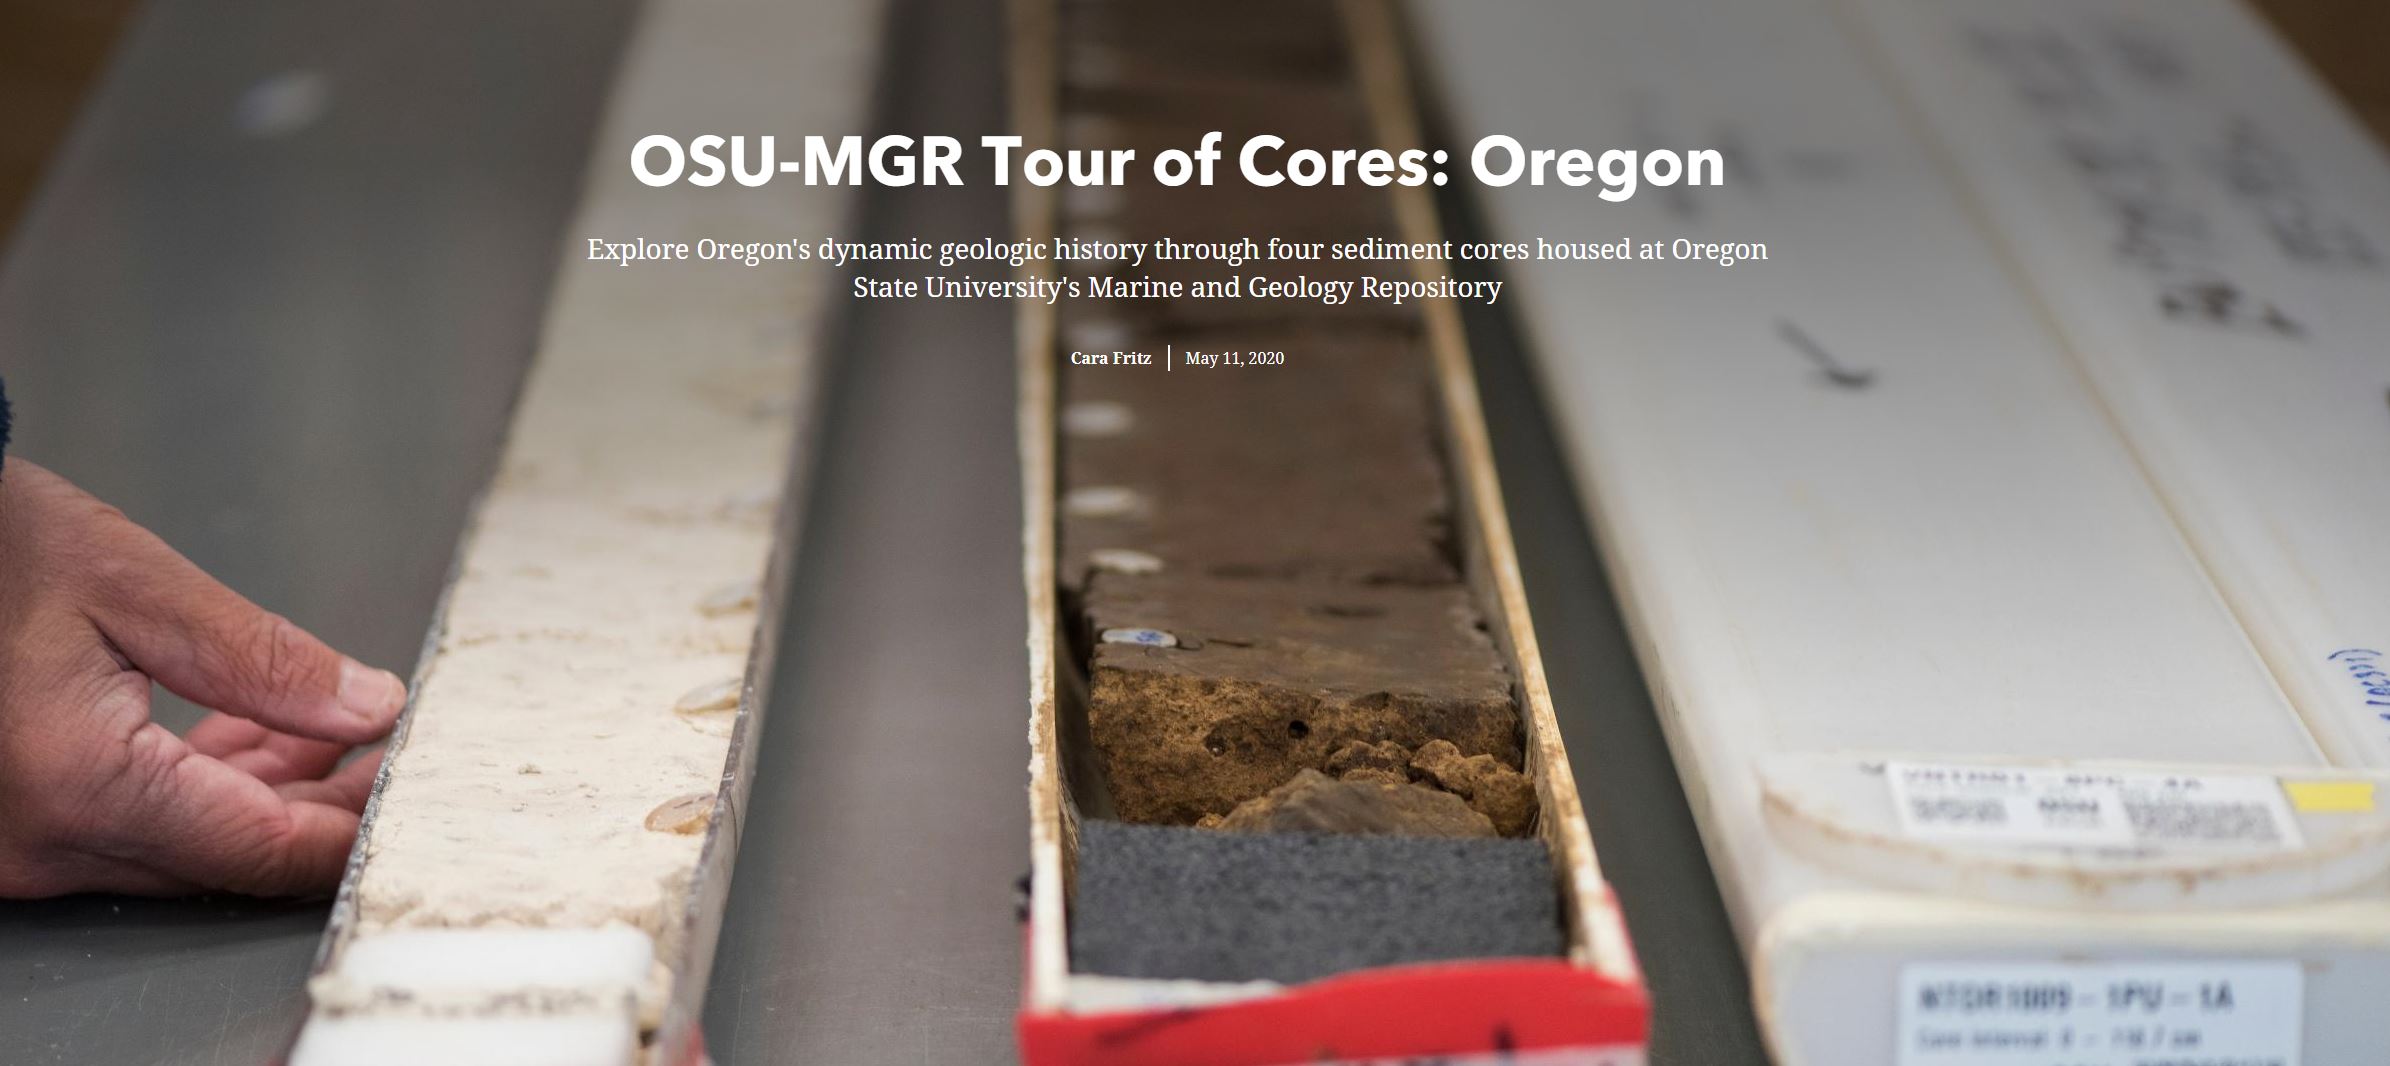 OSU Marine and Geology Repository